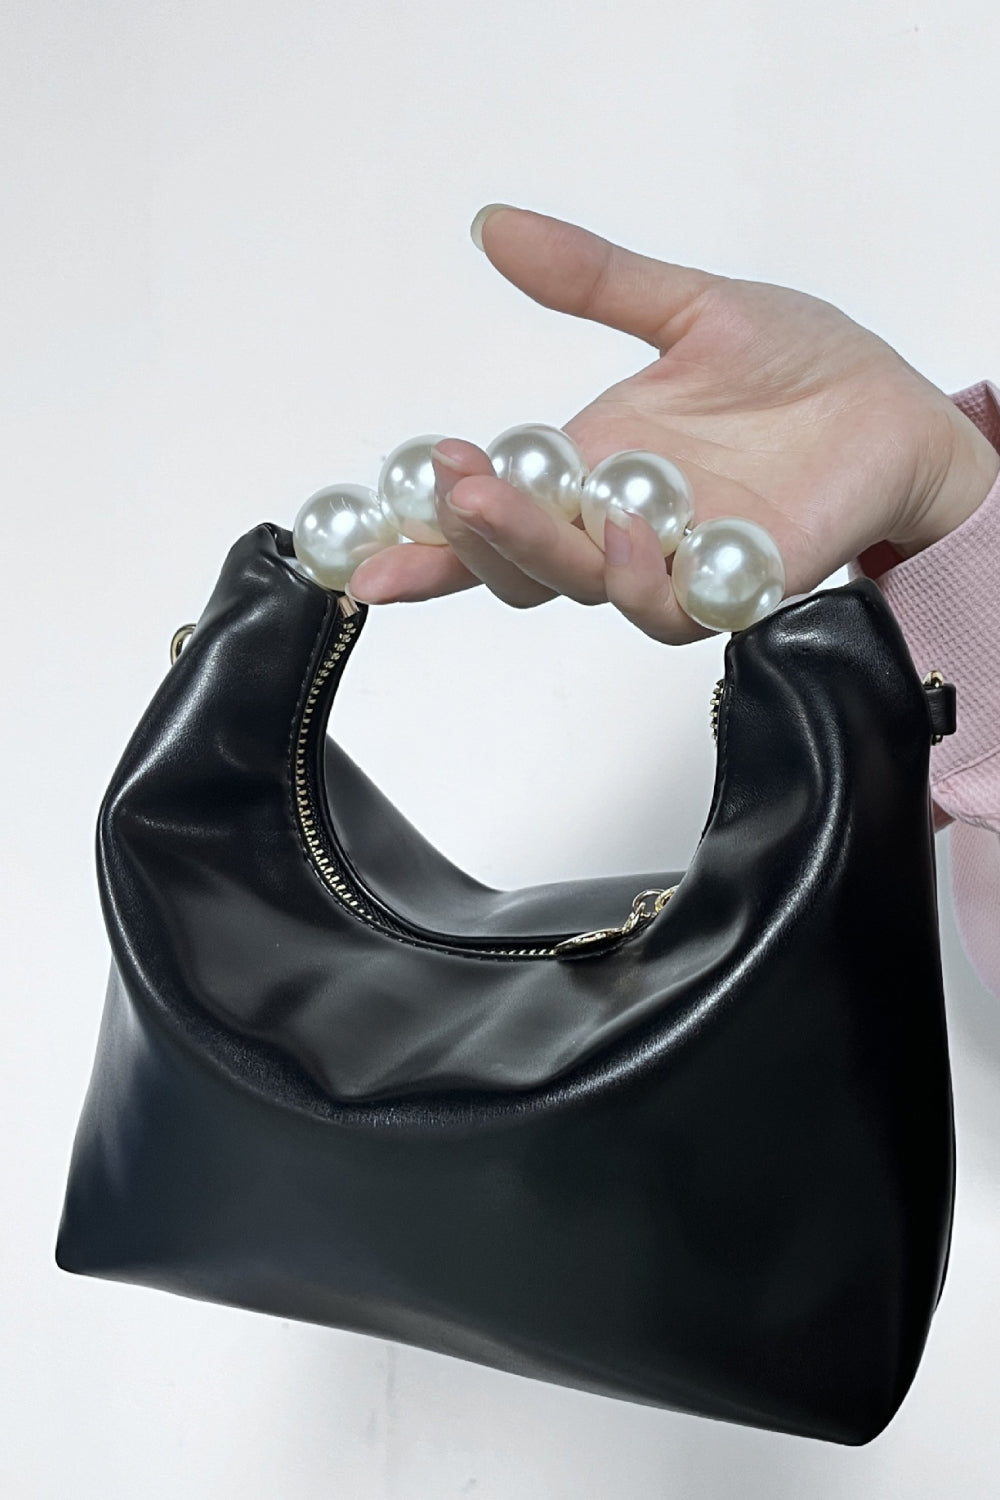 Adored PU Leather Pearl Handbag - Handbag - FITGGINS